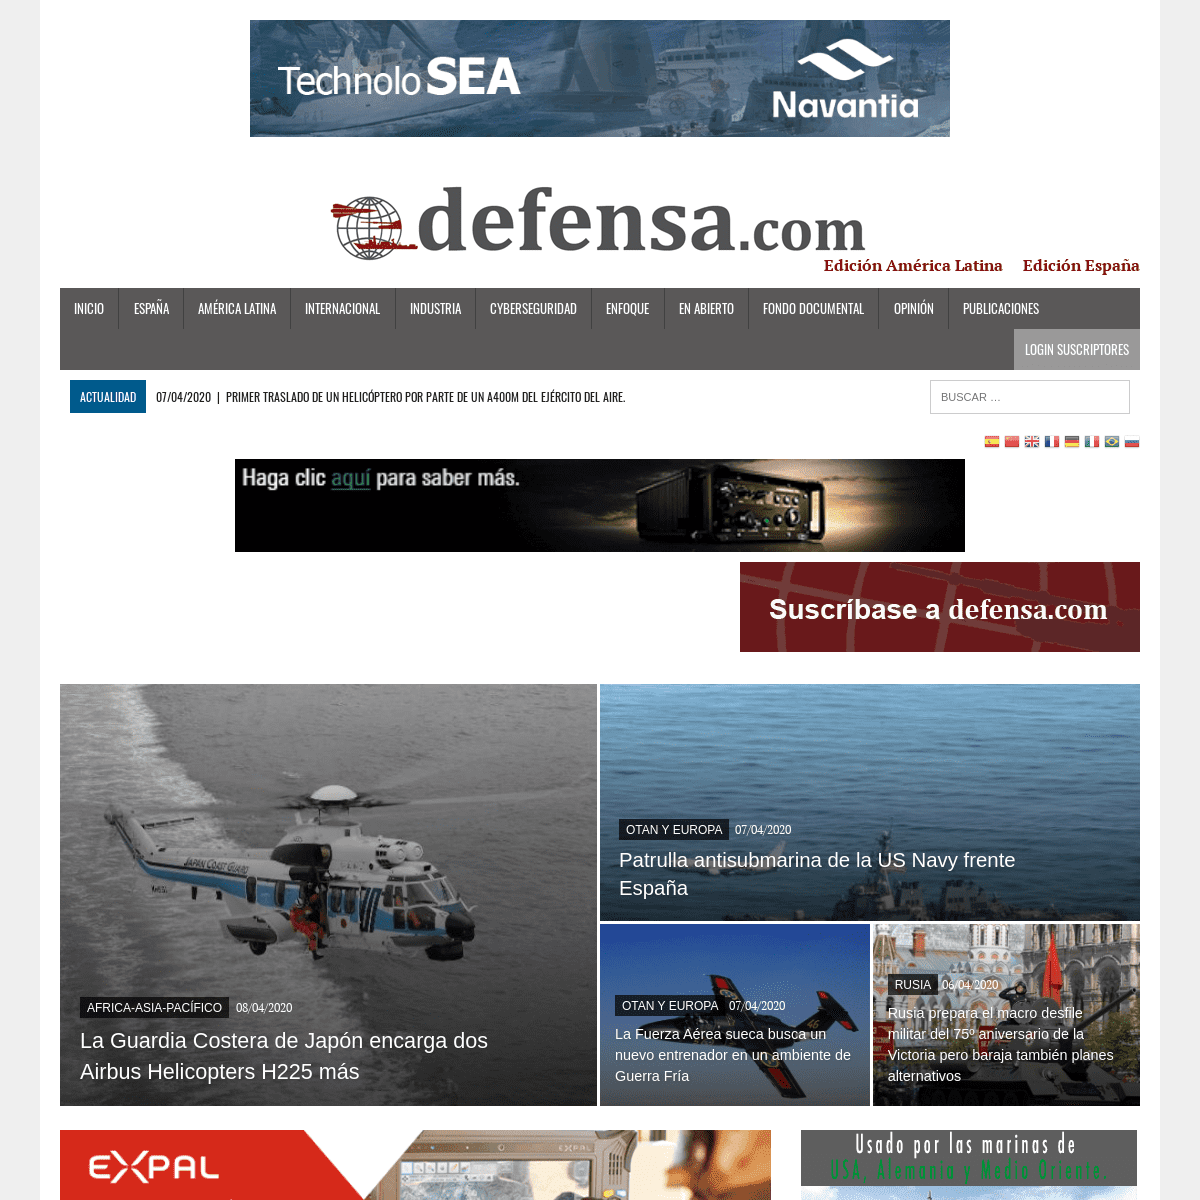 A complete backup of defensa.com